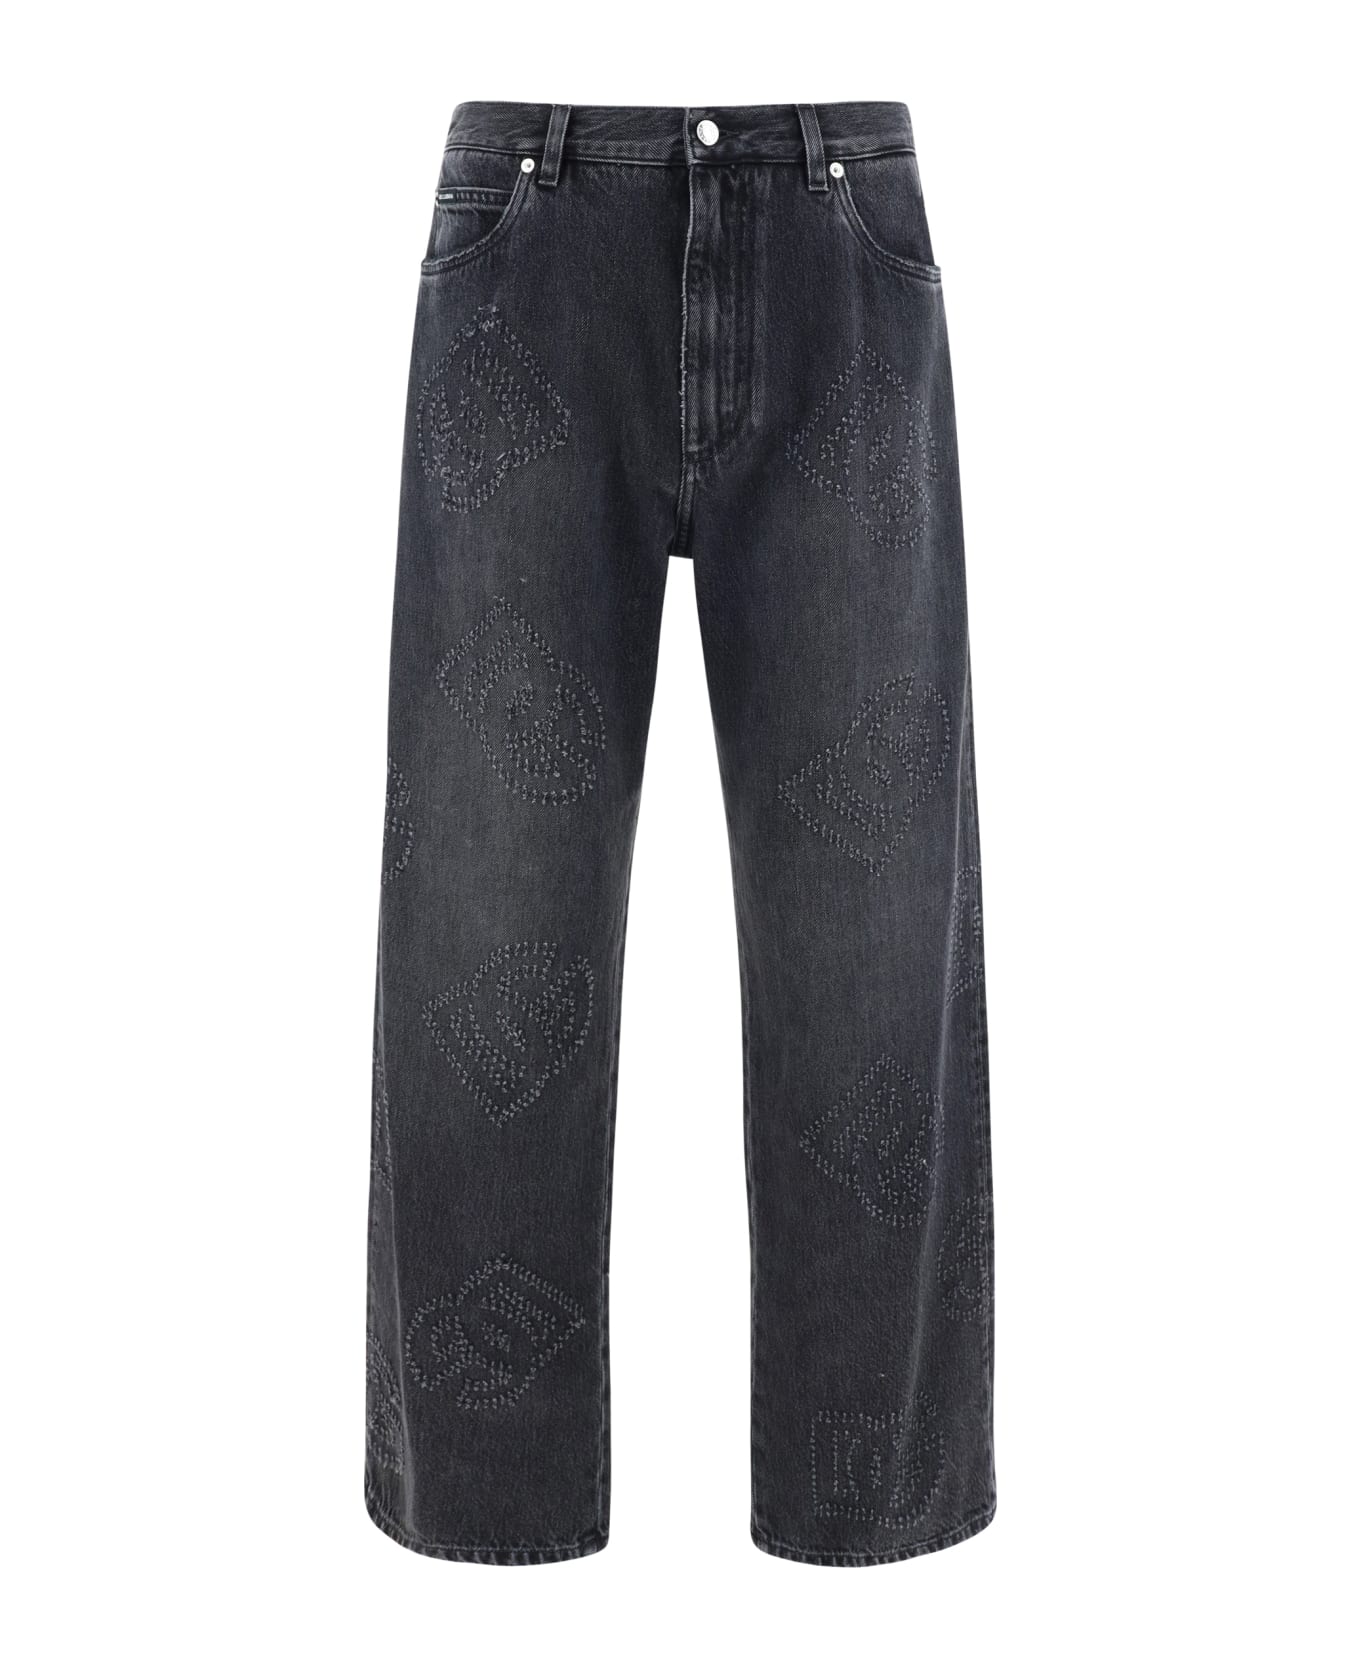 Dolce & Gabbana Dg Jeans - Variante Abbinata